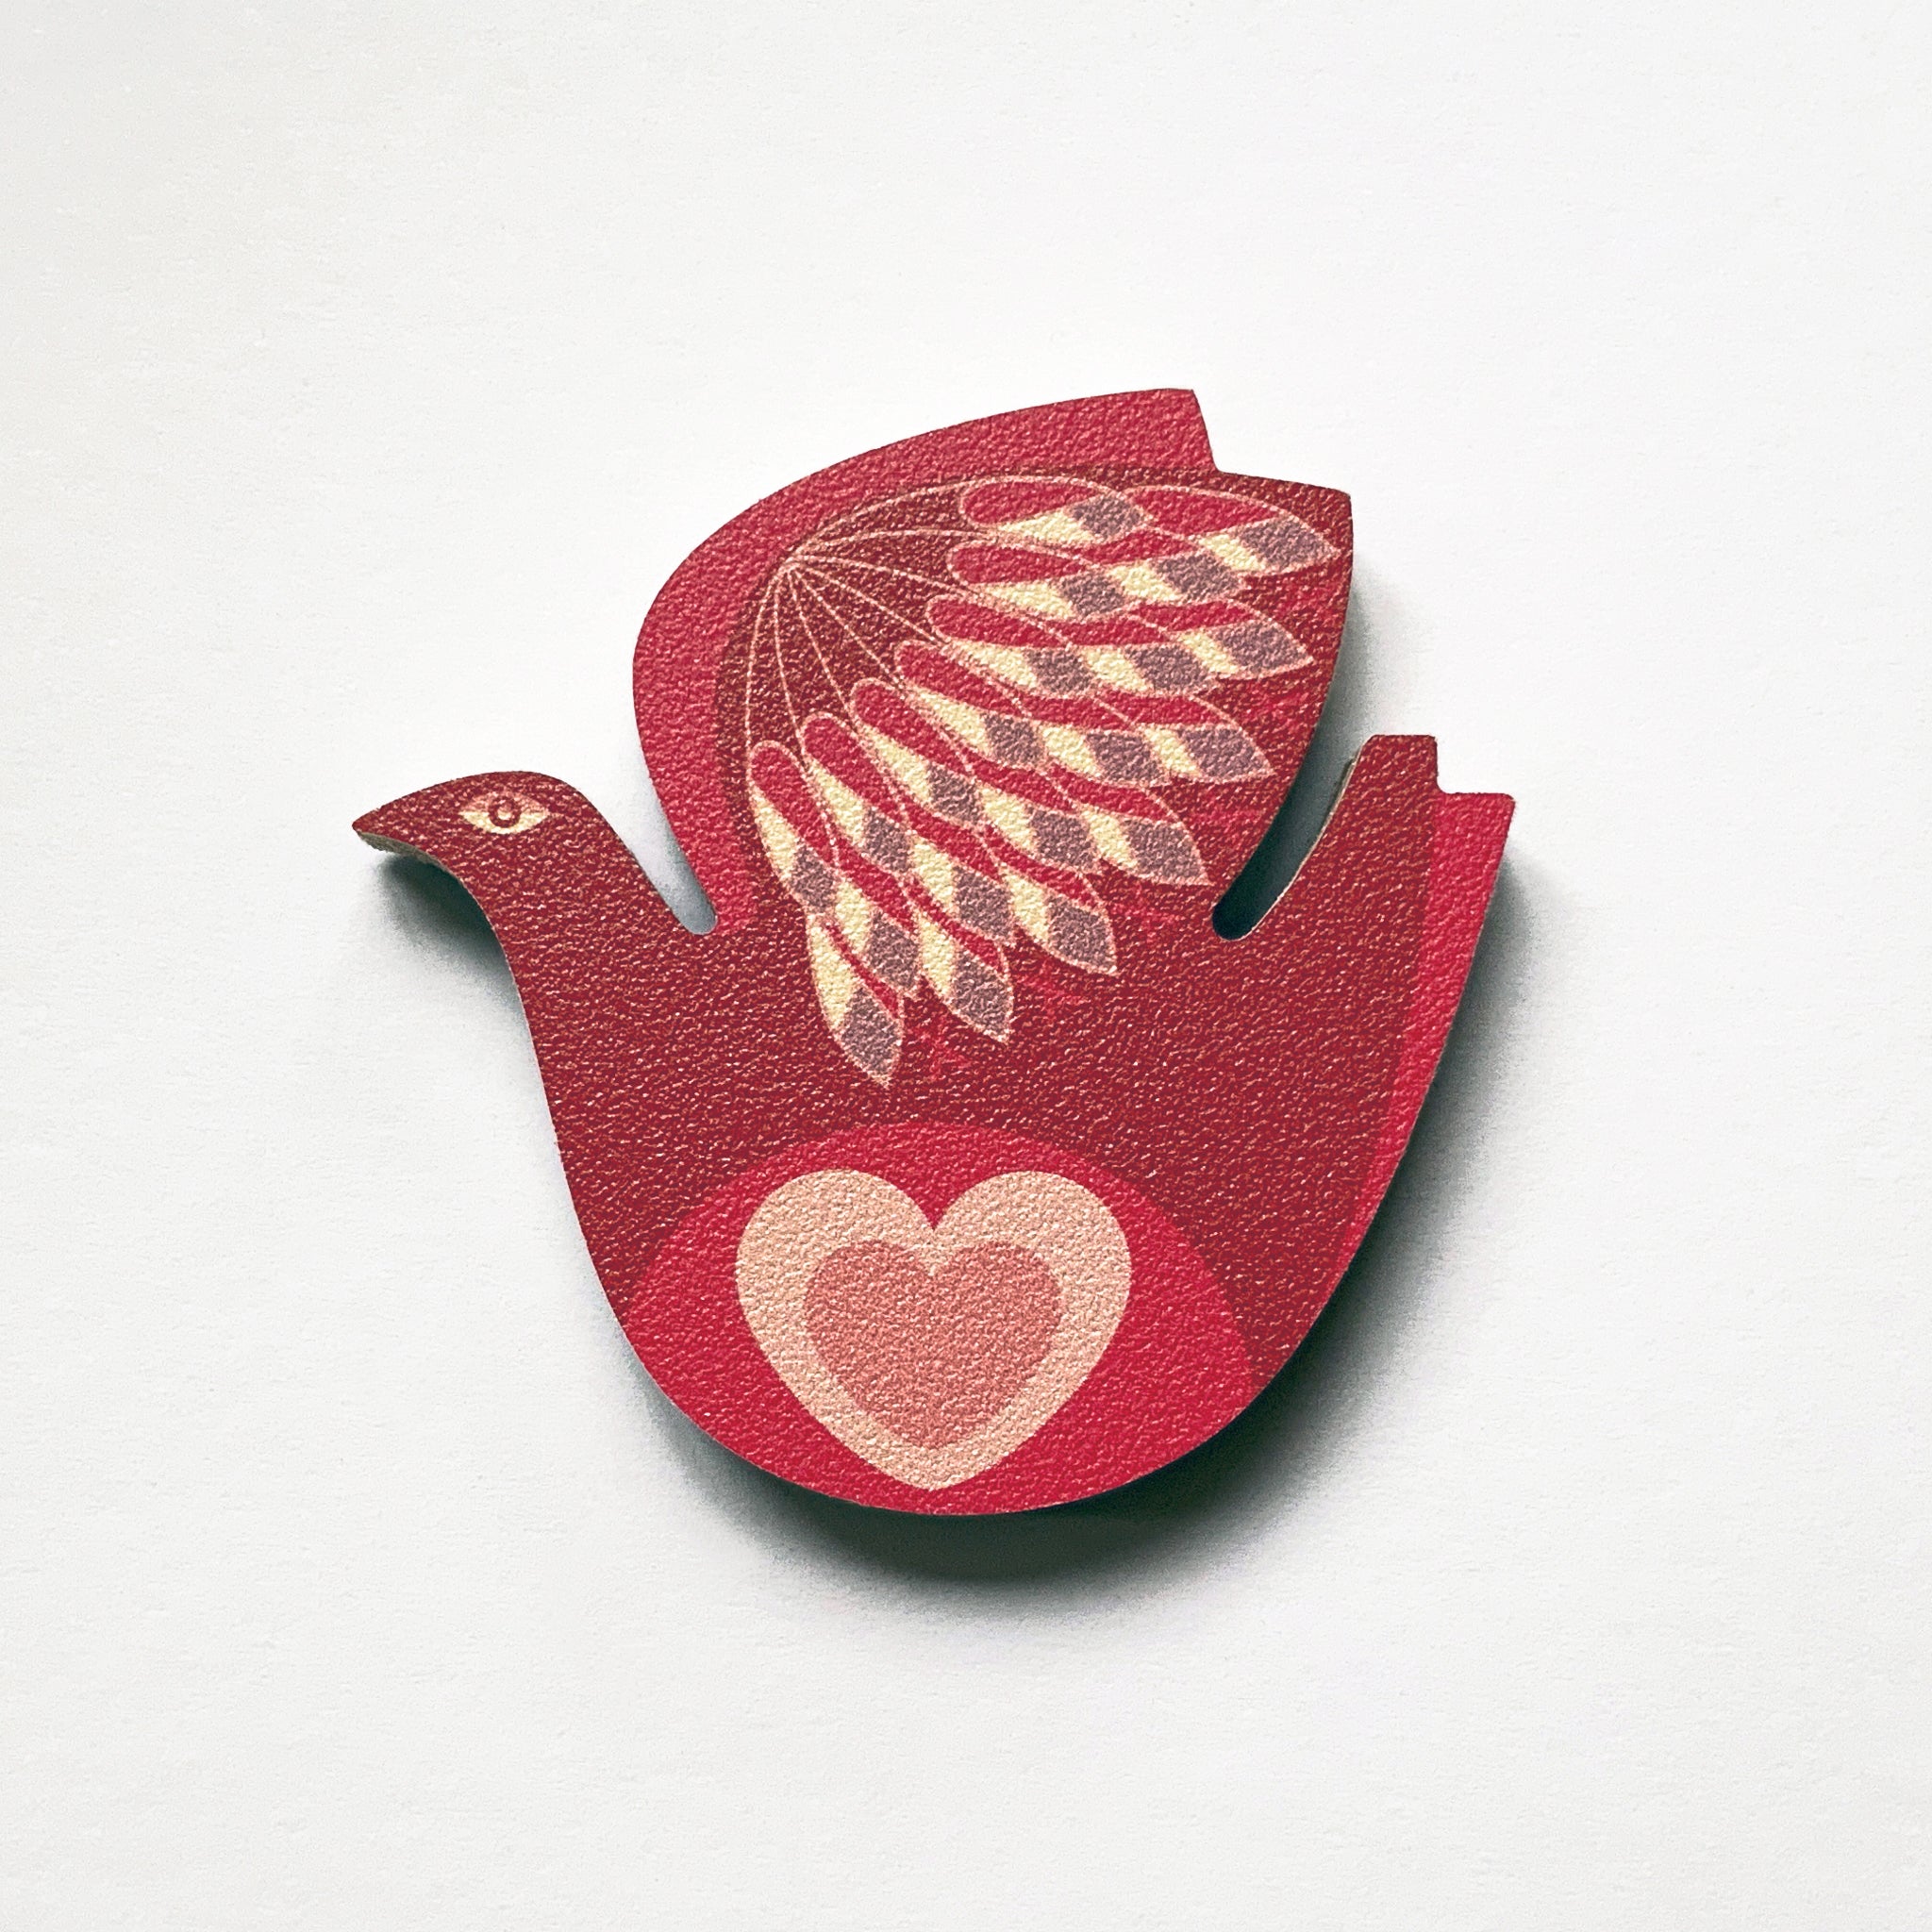 A lovebird shaped plywood fridge magnet by Beyond the Fridge